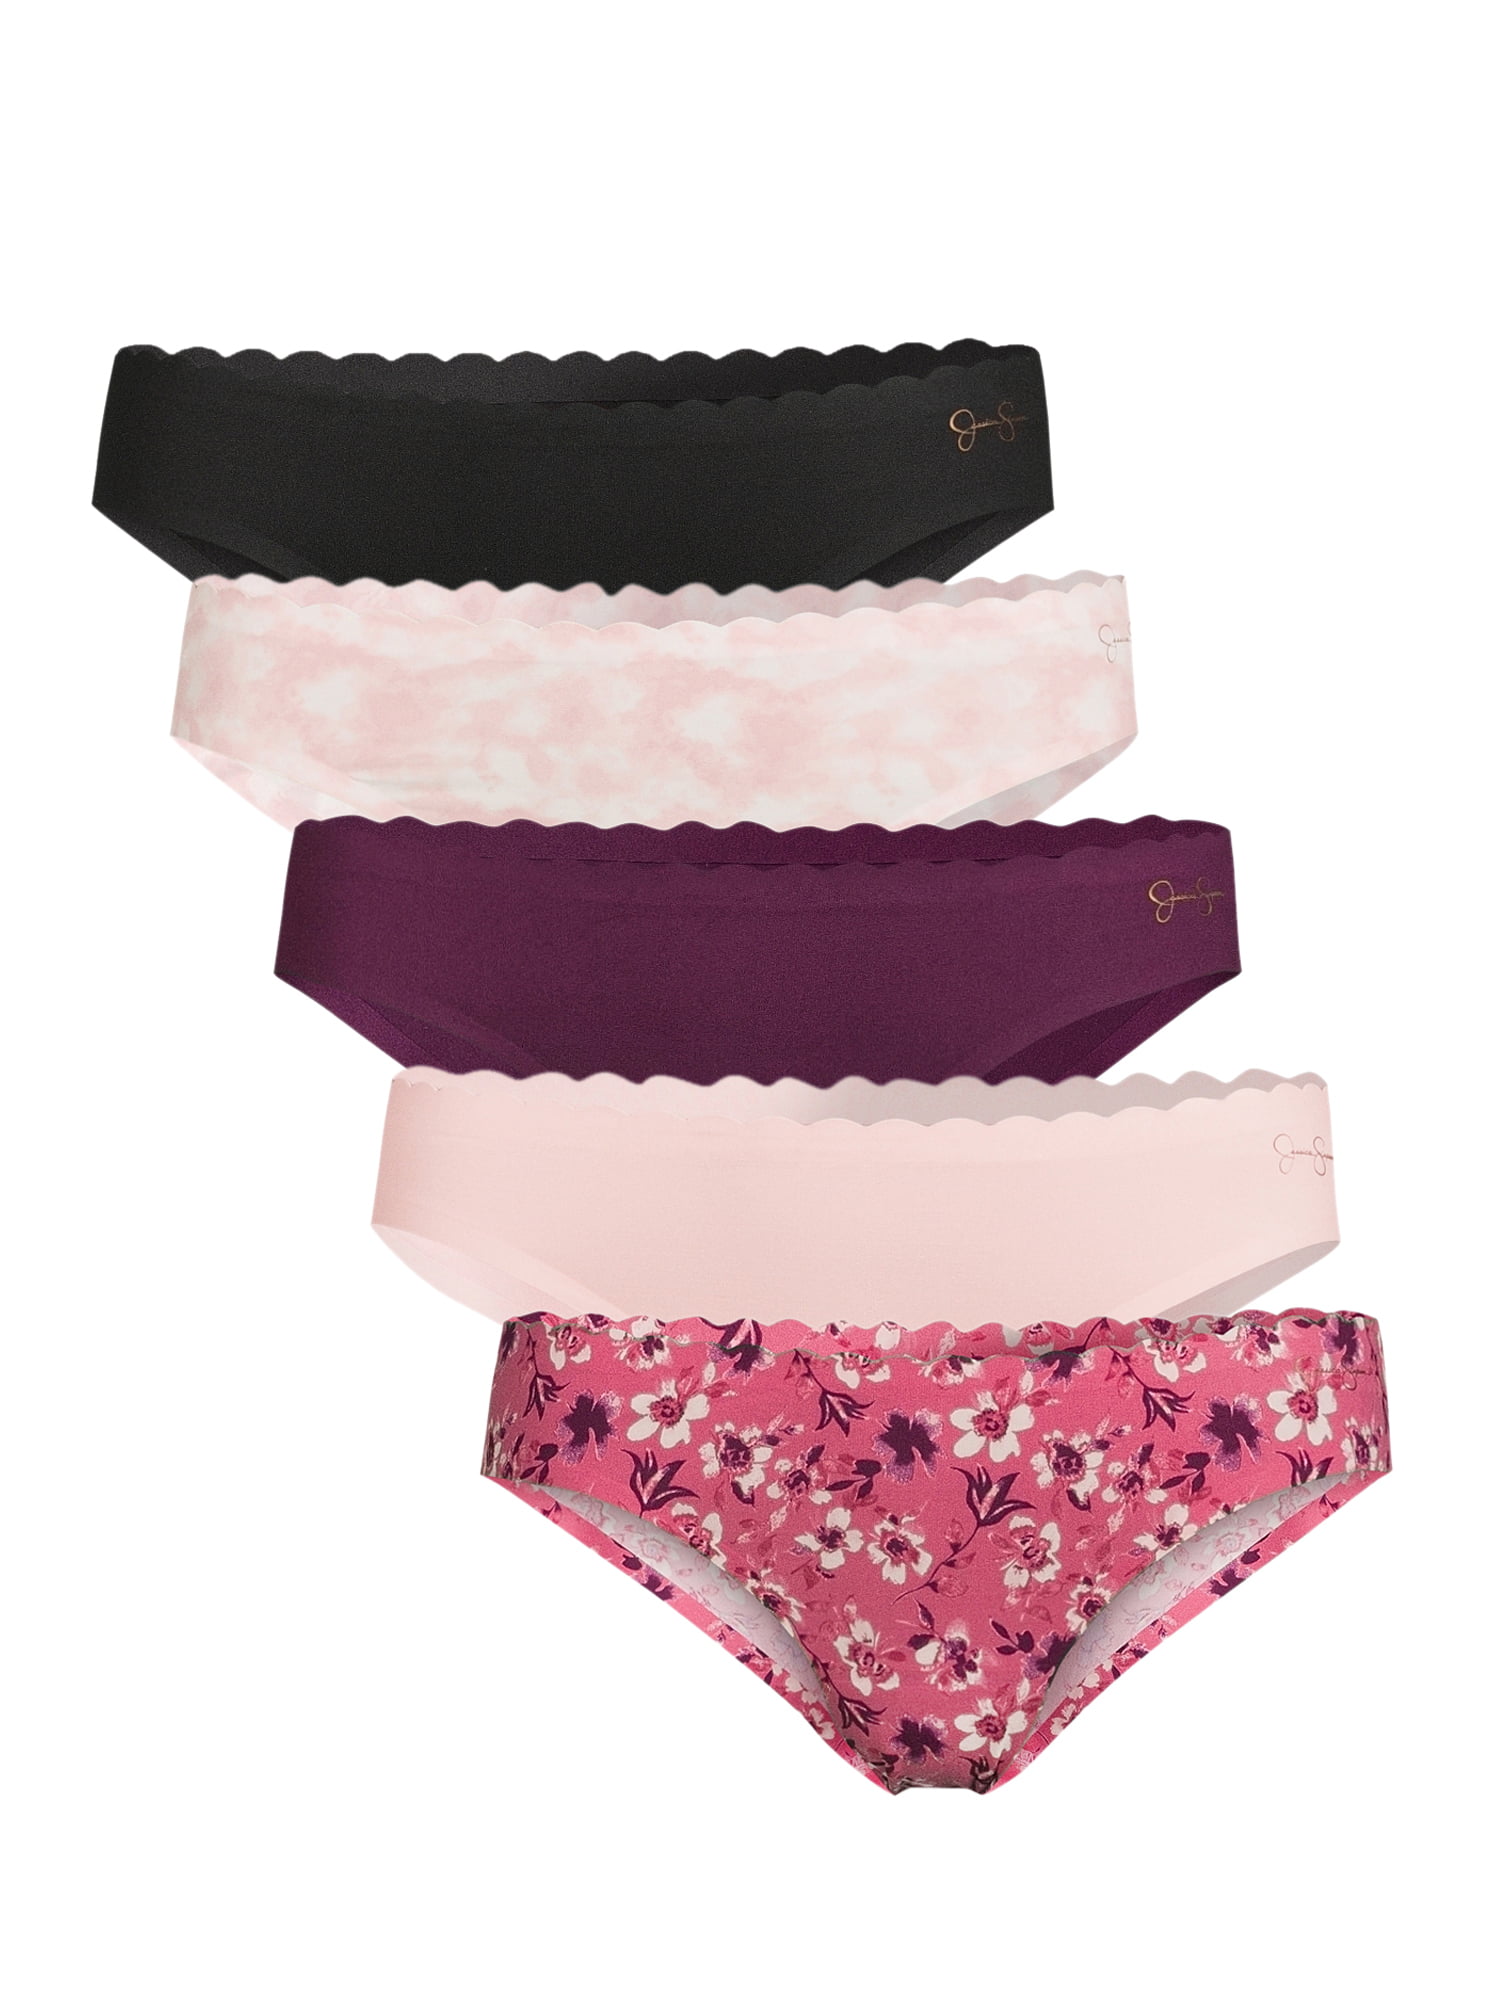 Jessica Simpson Women's Microfiber Scalloped Bikini Panties, 5